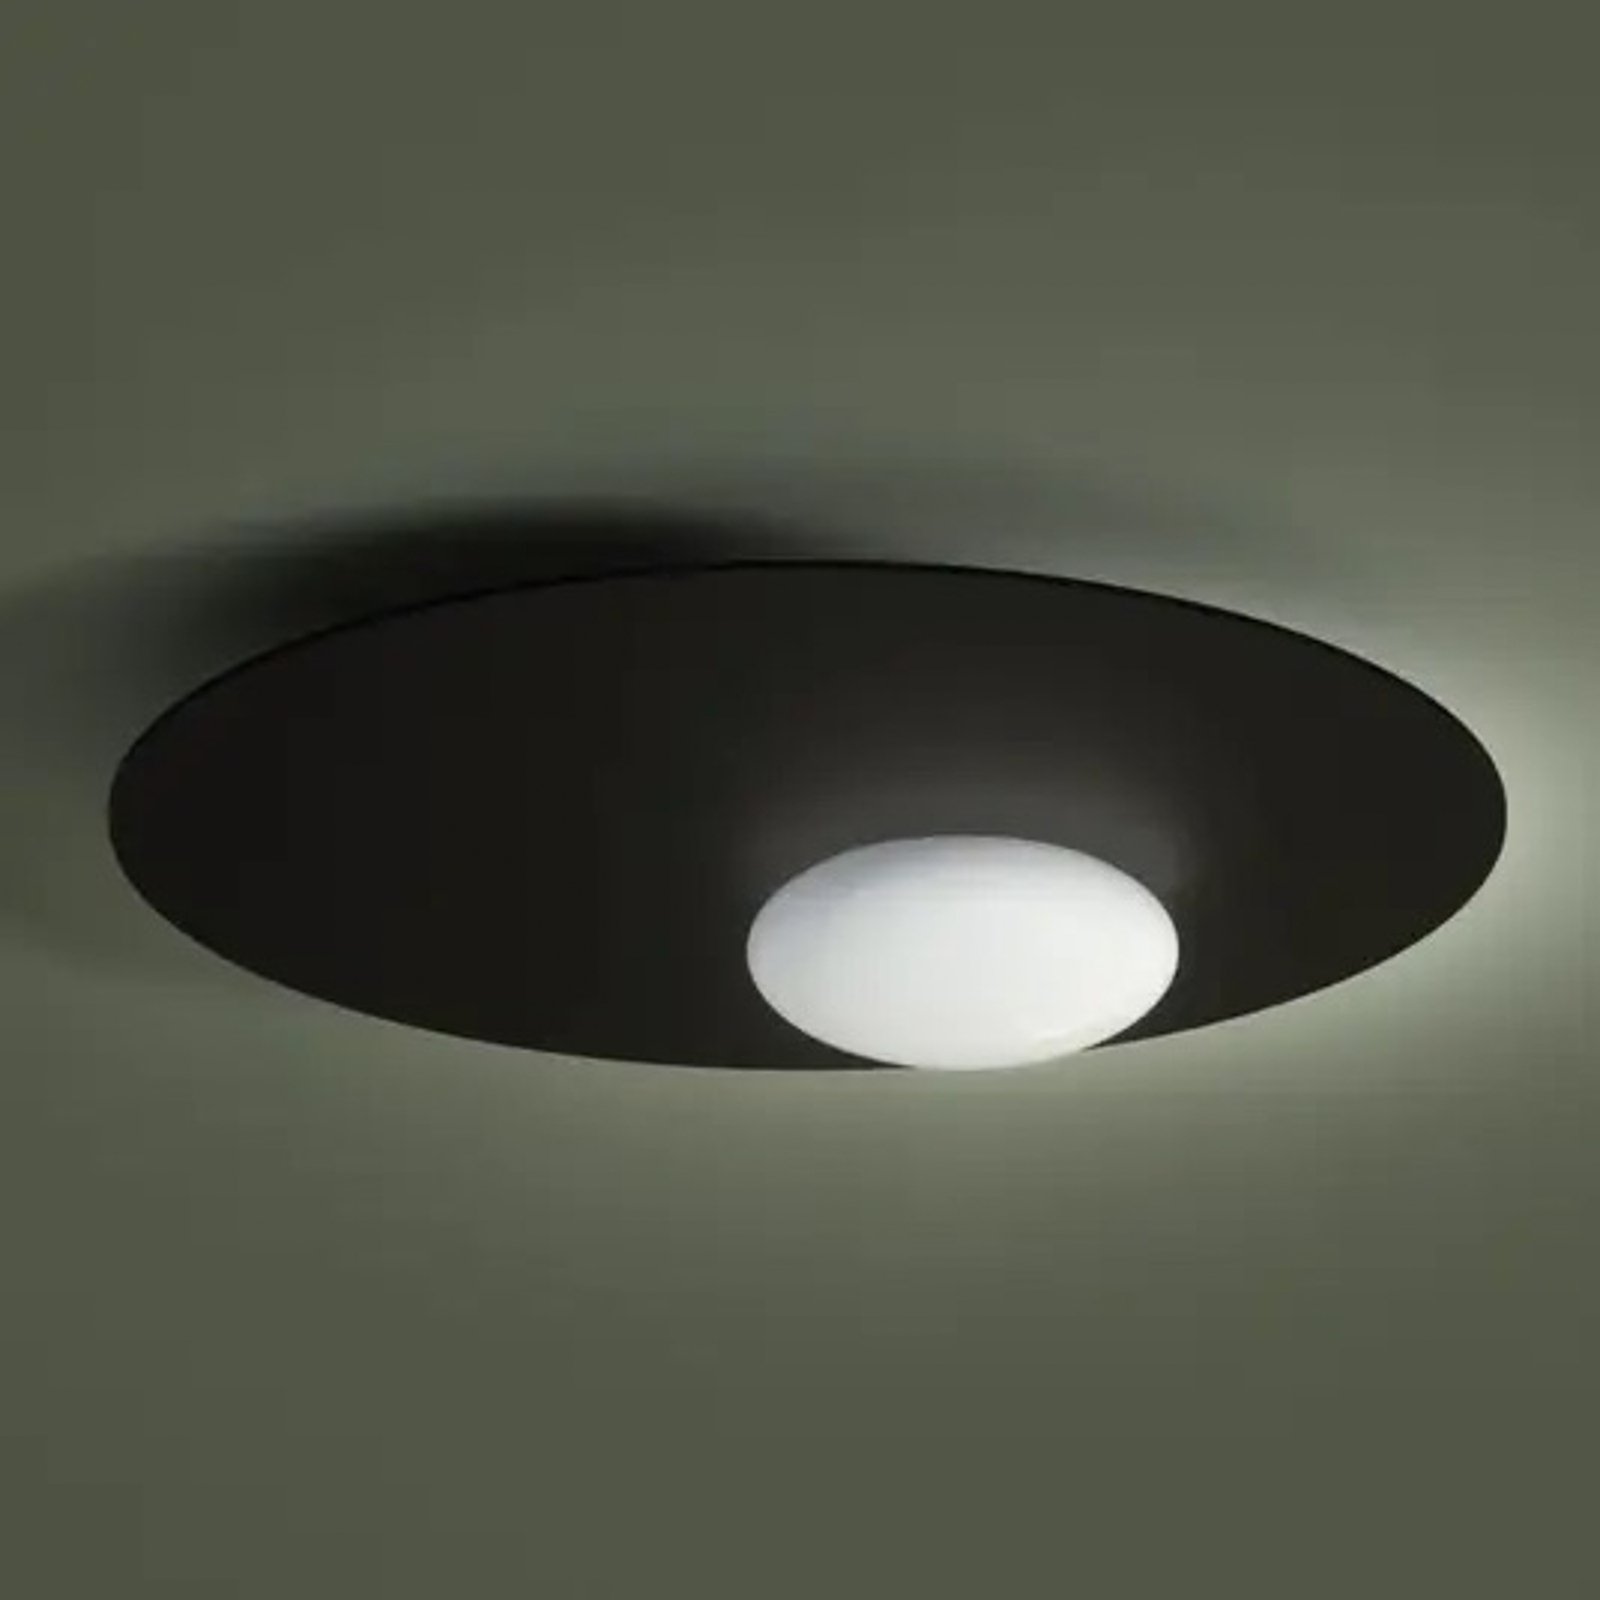 Axolight Kwic plafonnier LED, noir Ø36 cm